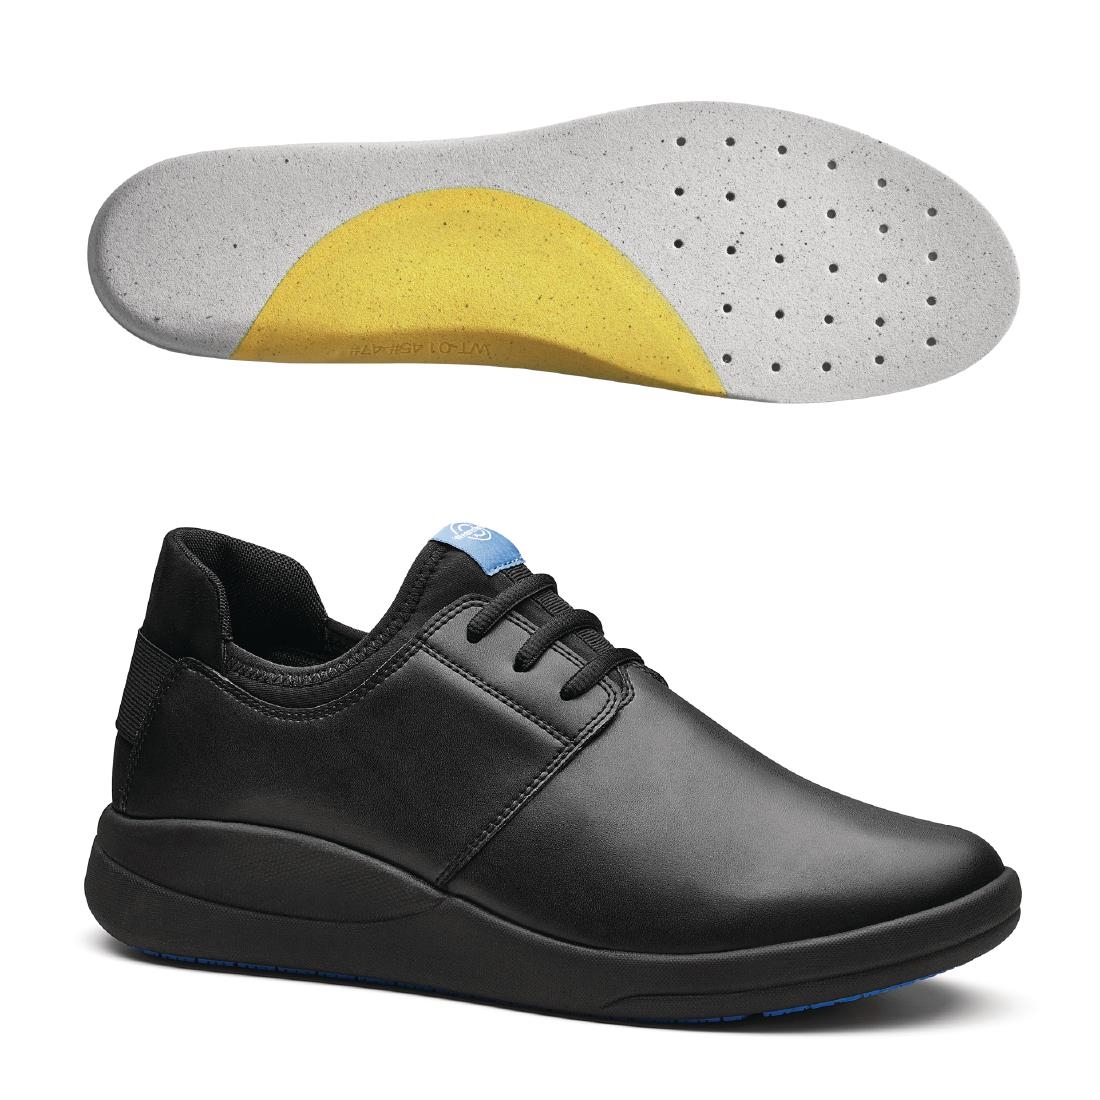 WearerTech Relieve Shoe Black with Soft Insoles Size 42